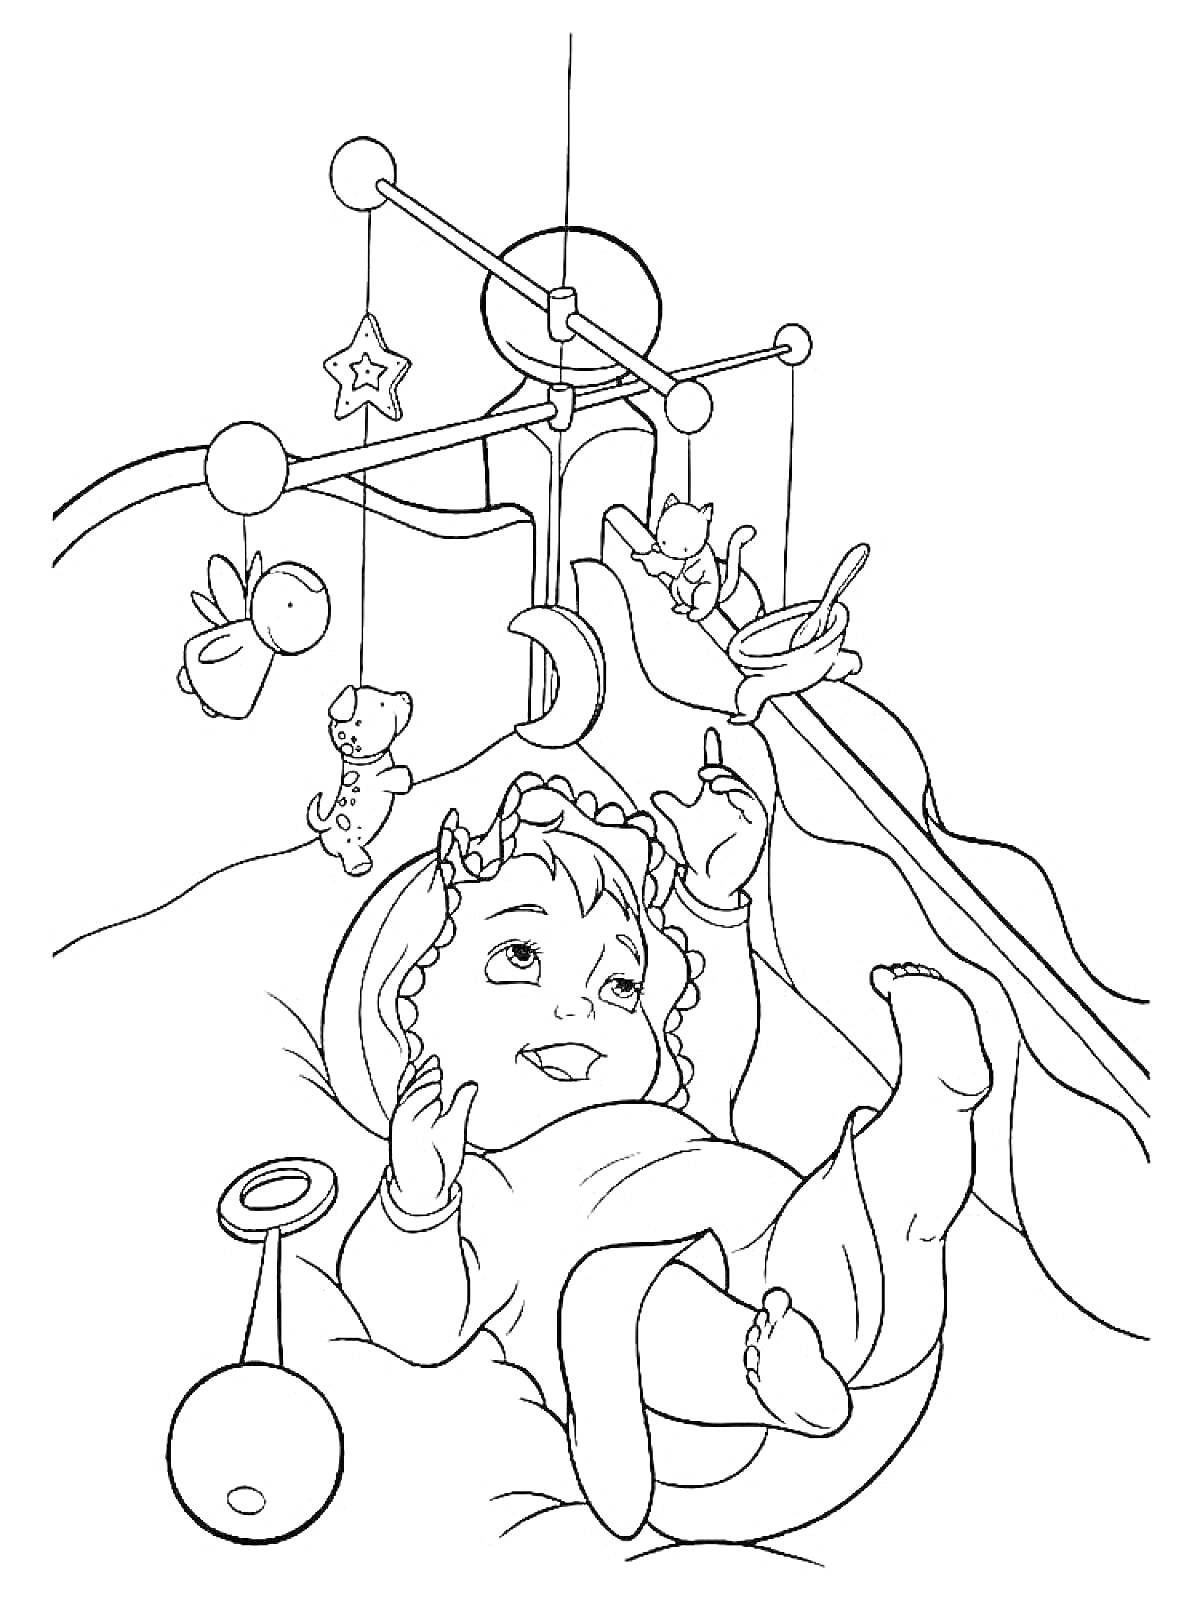 На раскраске изображено: Младенец, Погремушка, Ложка, Игрушки, Кровати